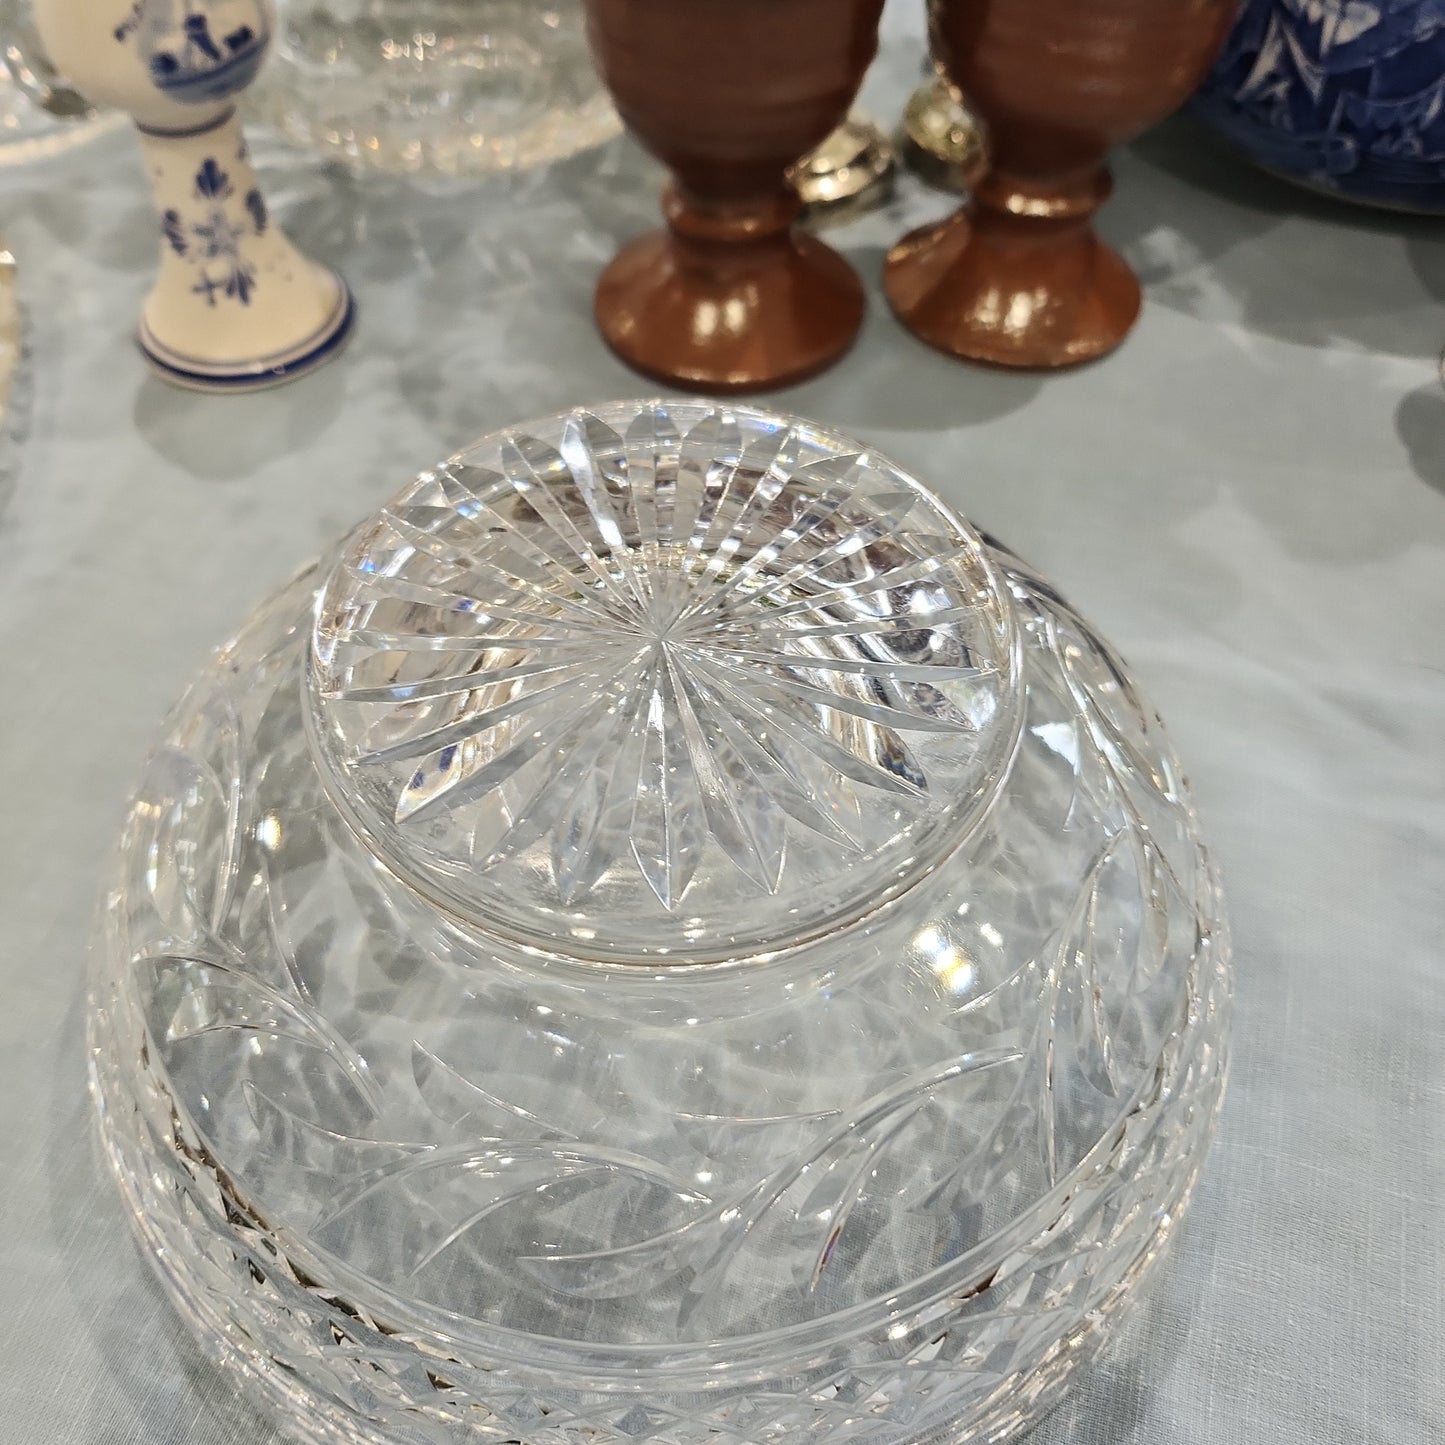 High quality Waterford crystal bowl 21 x 10 cm